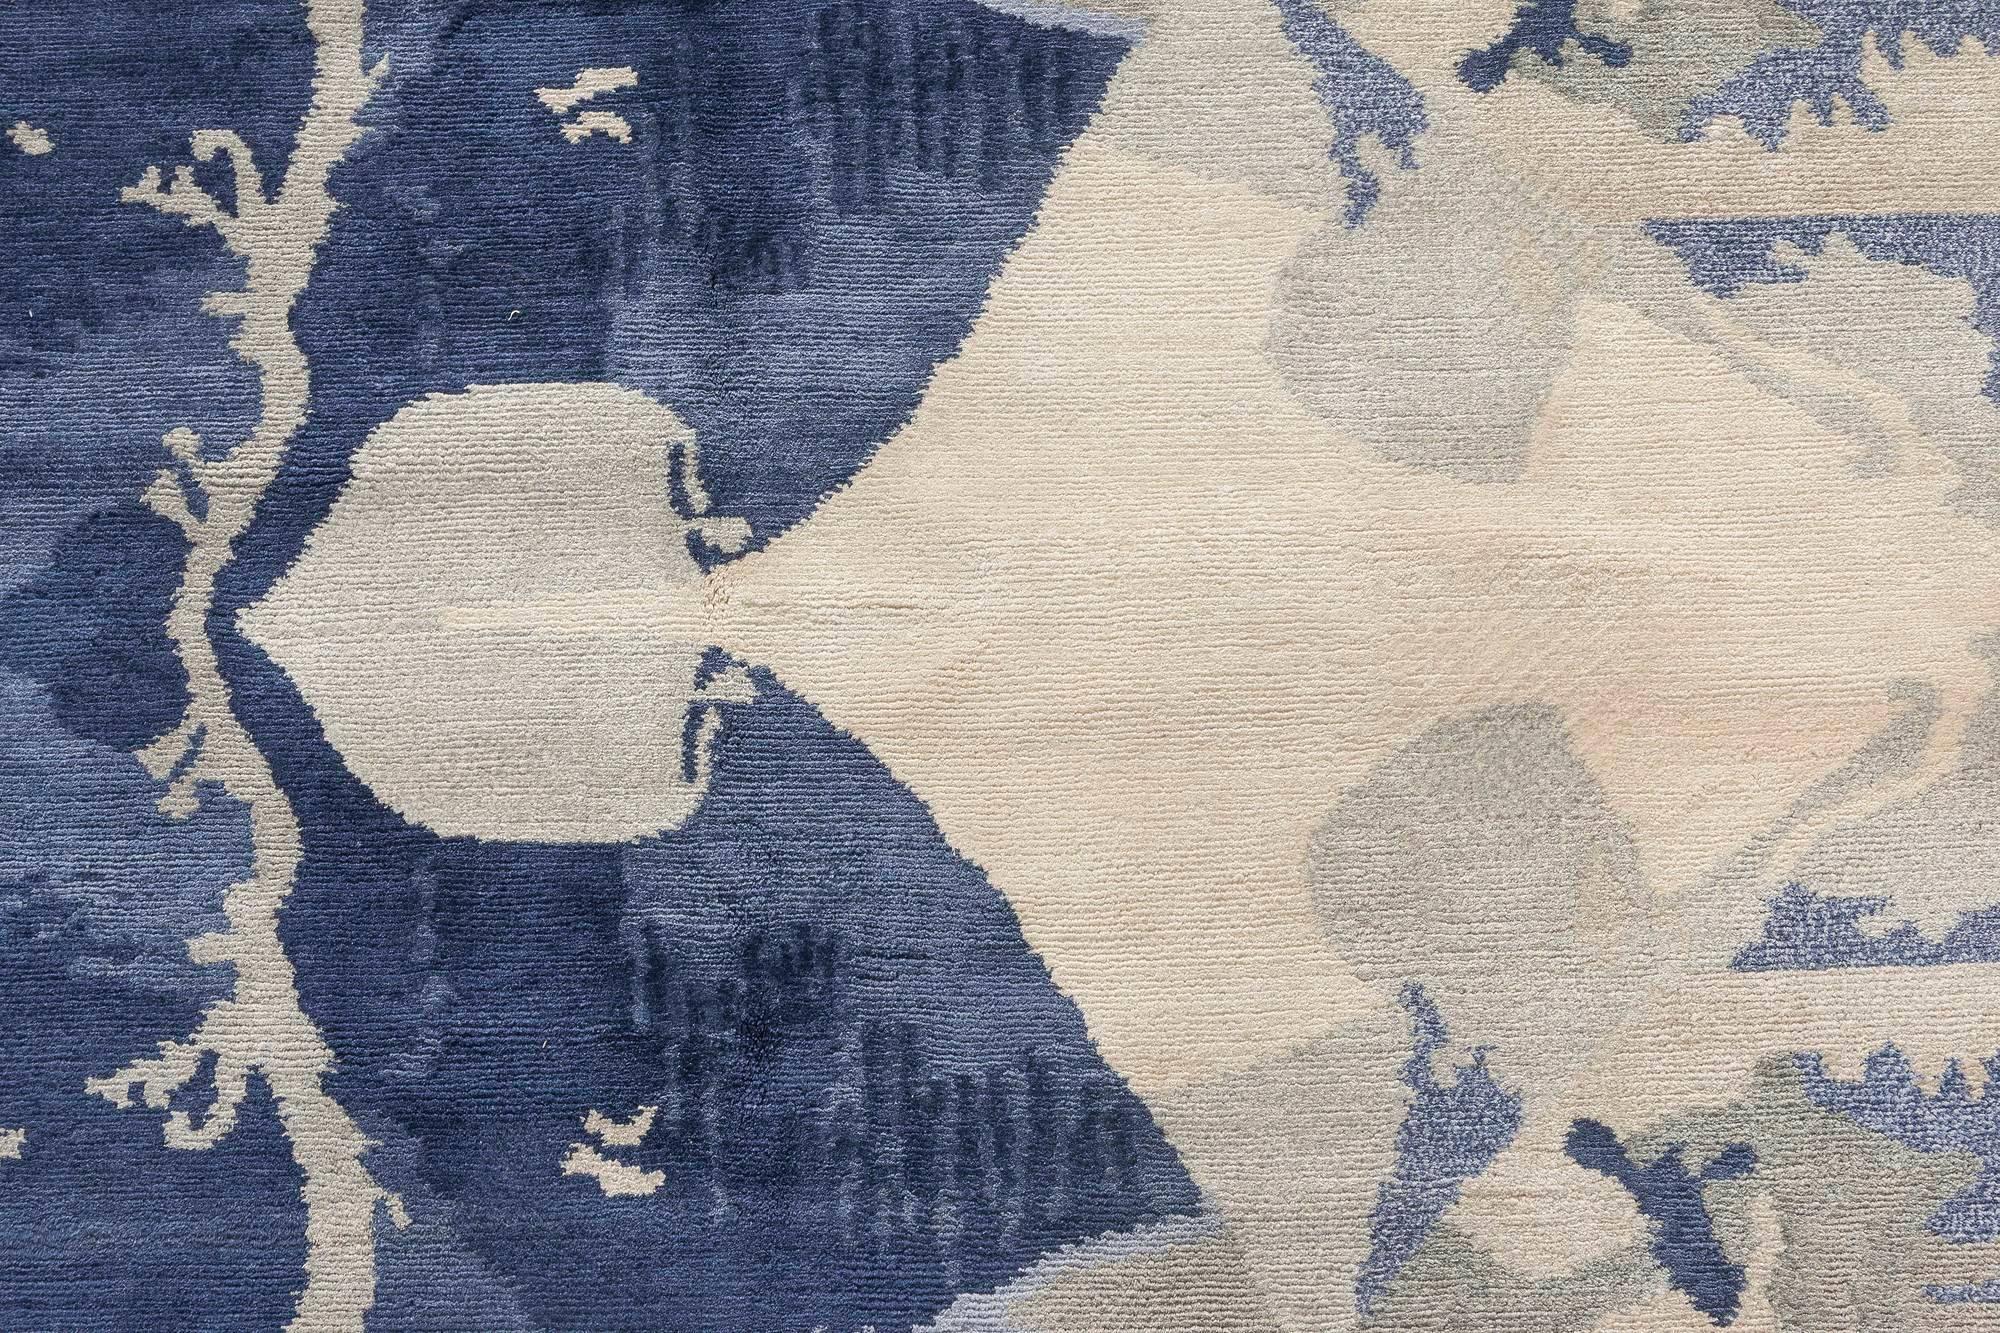 Contemporary Blucie design handmade silk rug by Doris Leslie Blau.
Size: 12'0